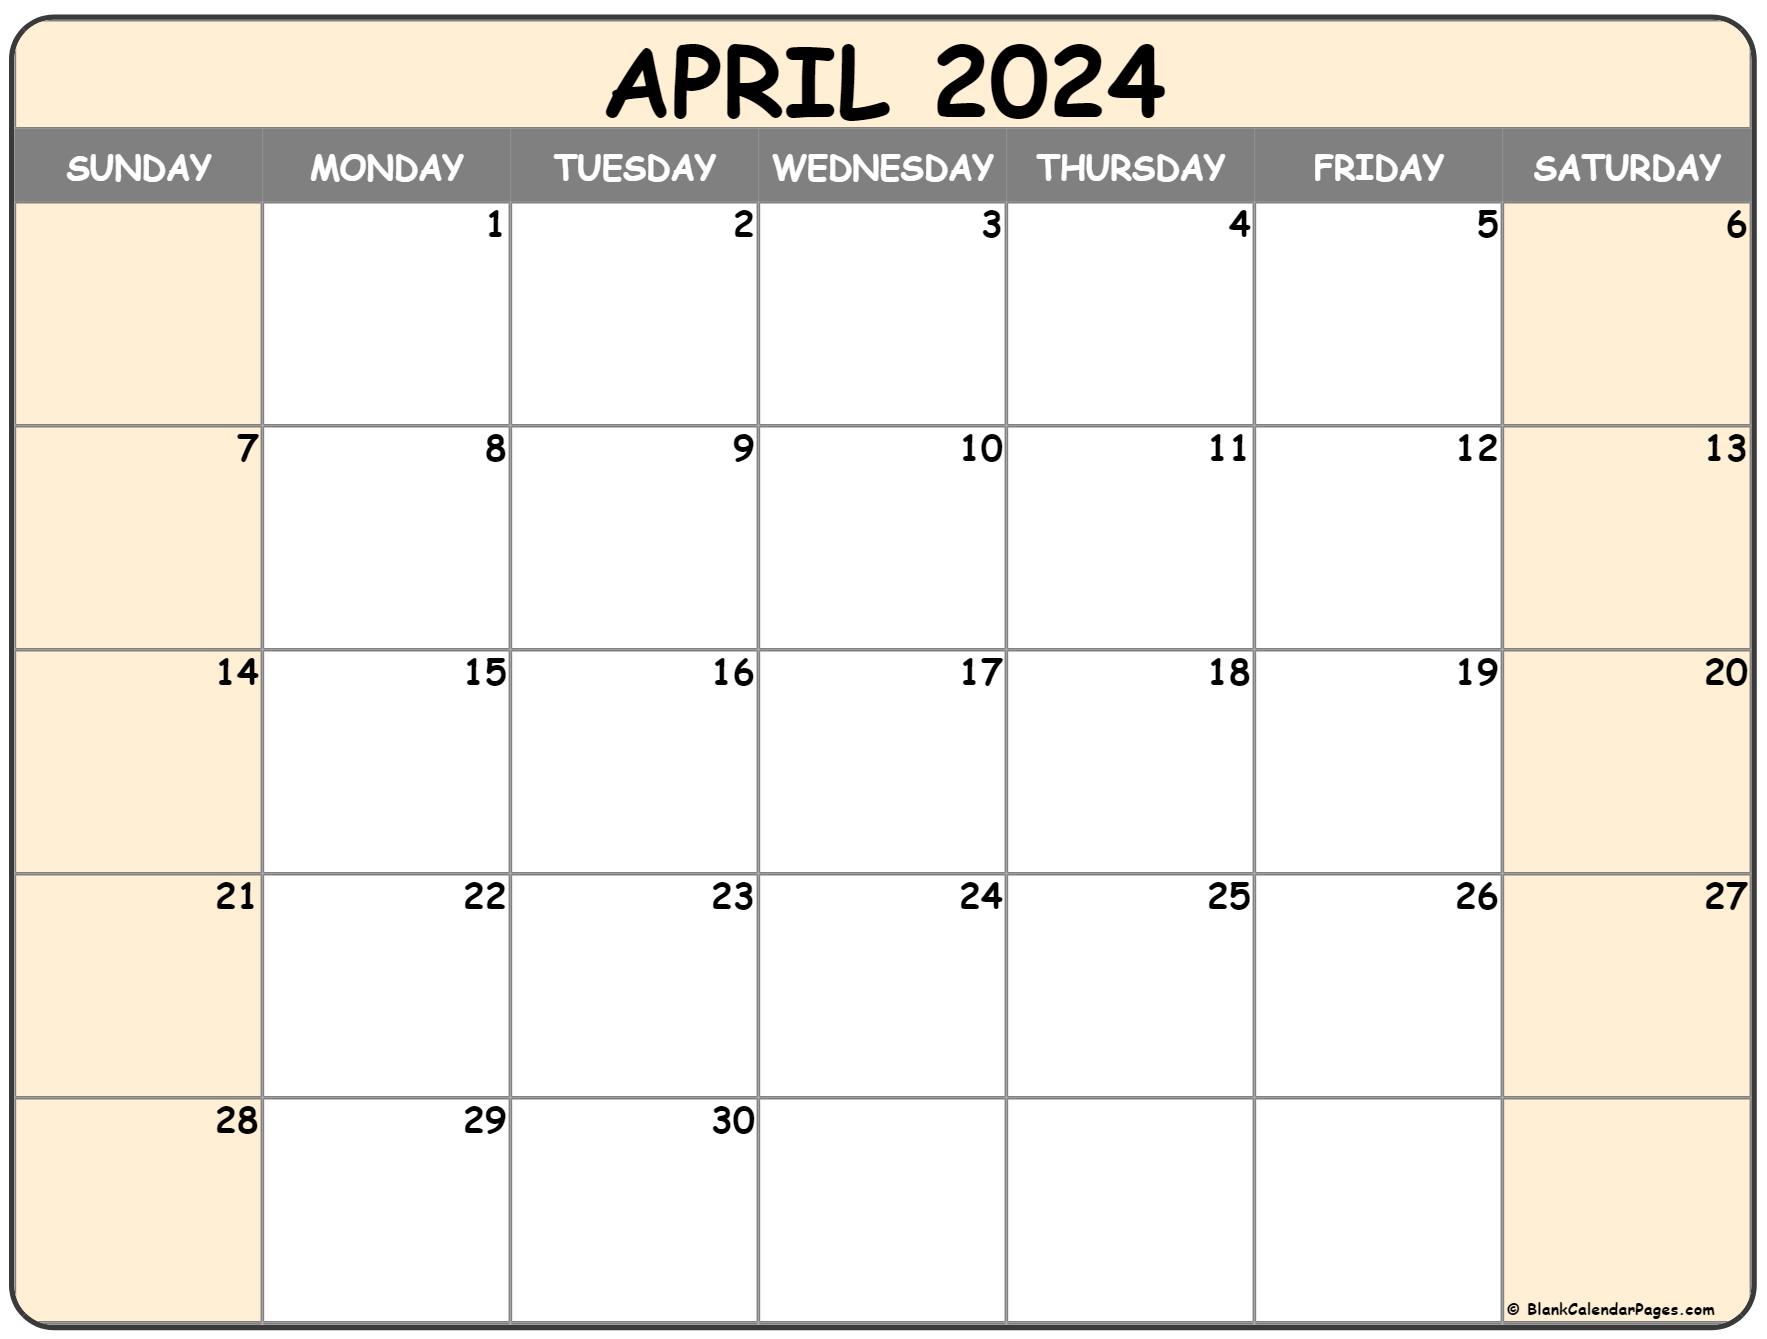 April 2022 calendar | free printable monthly calendars